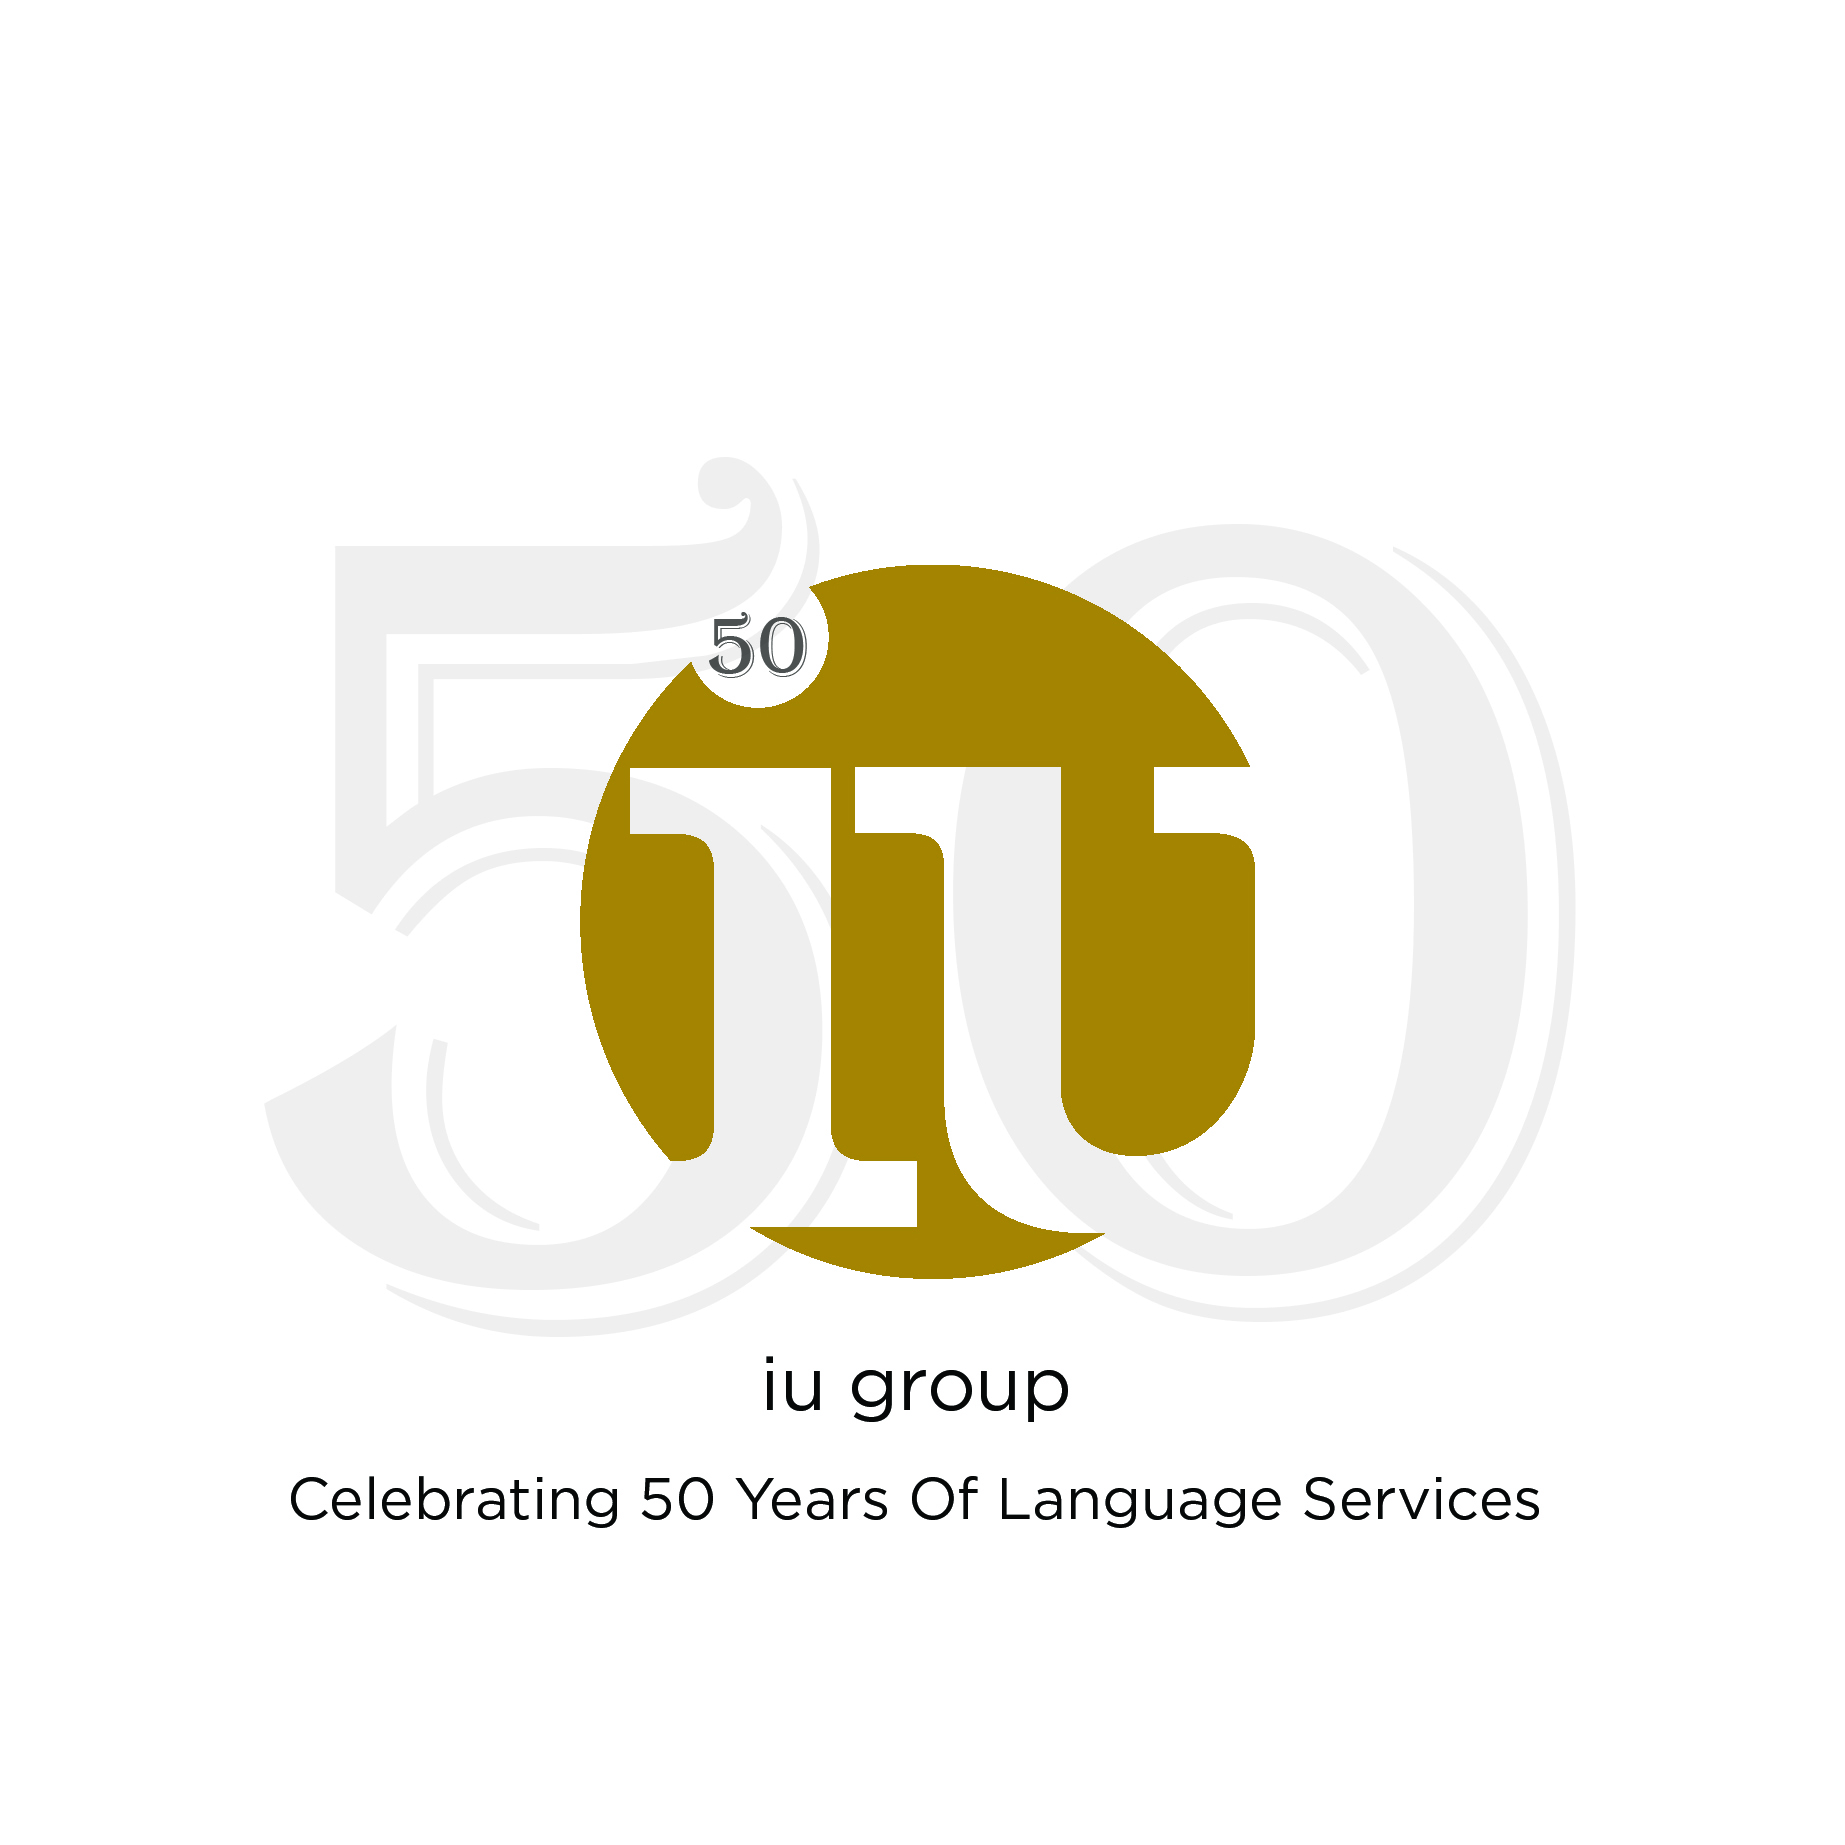 Interpreters Unlimited Celebrates Their 50th Anniversary